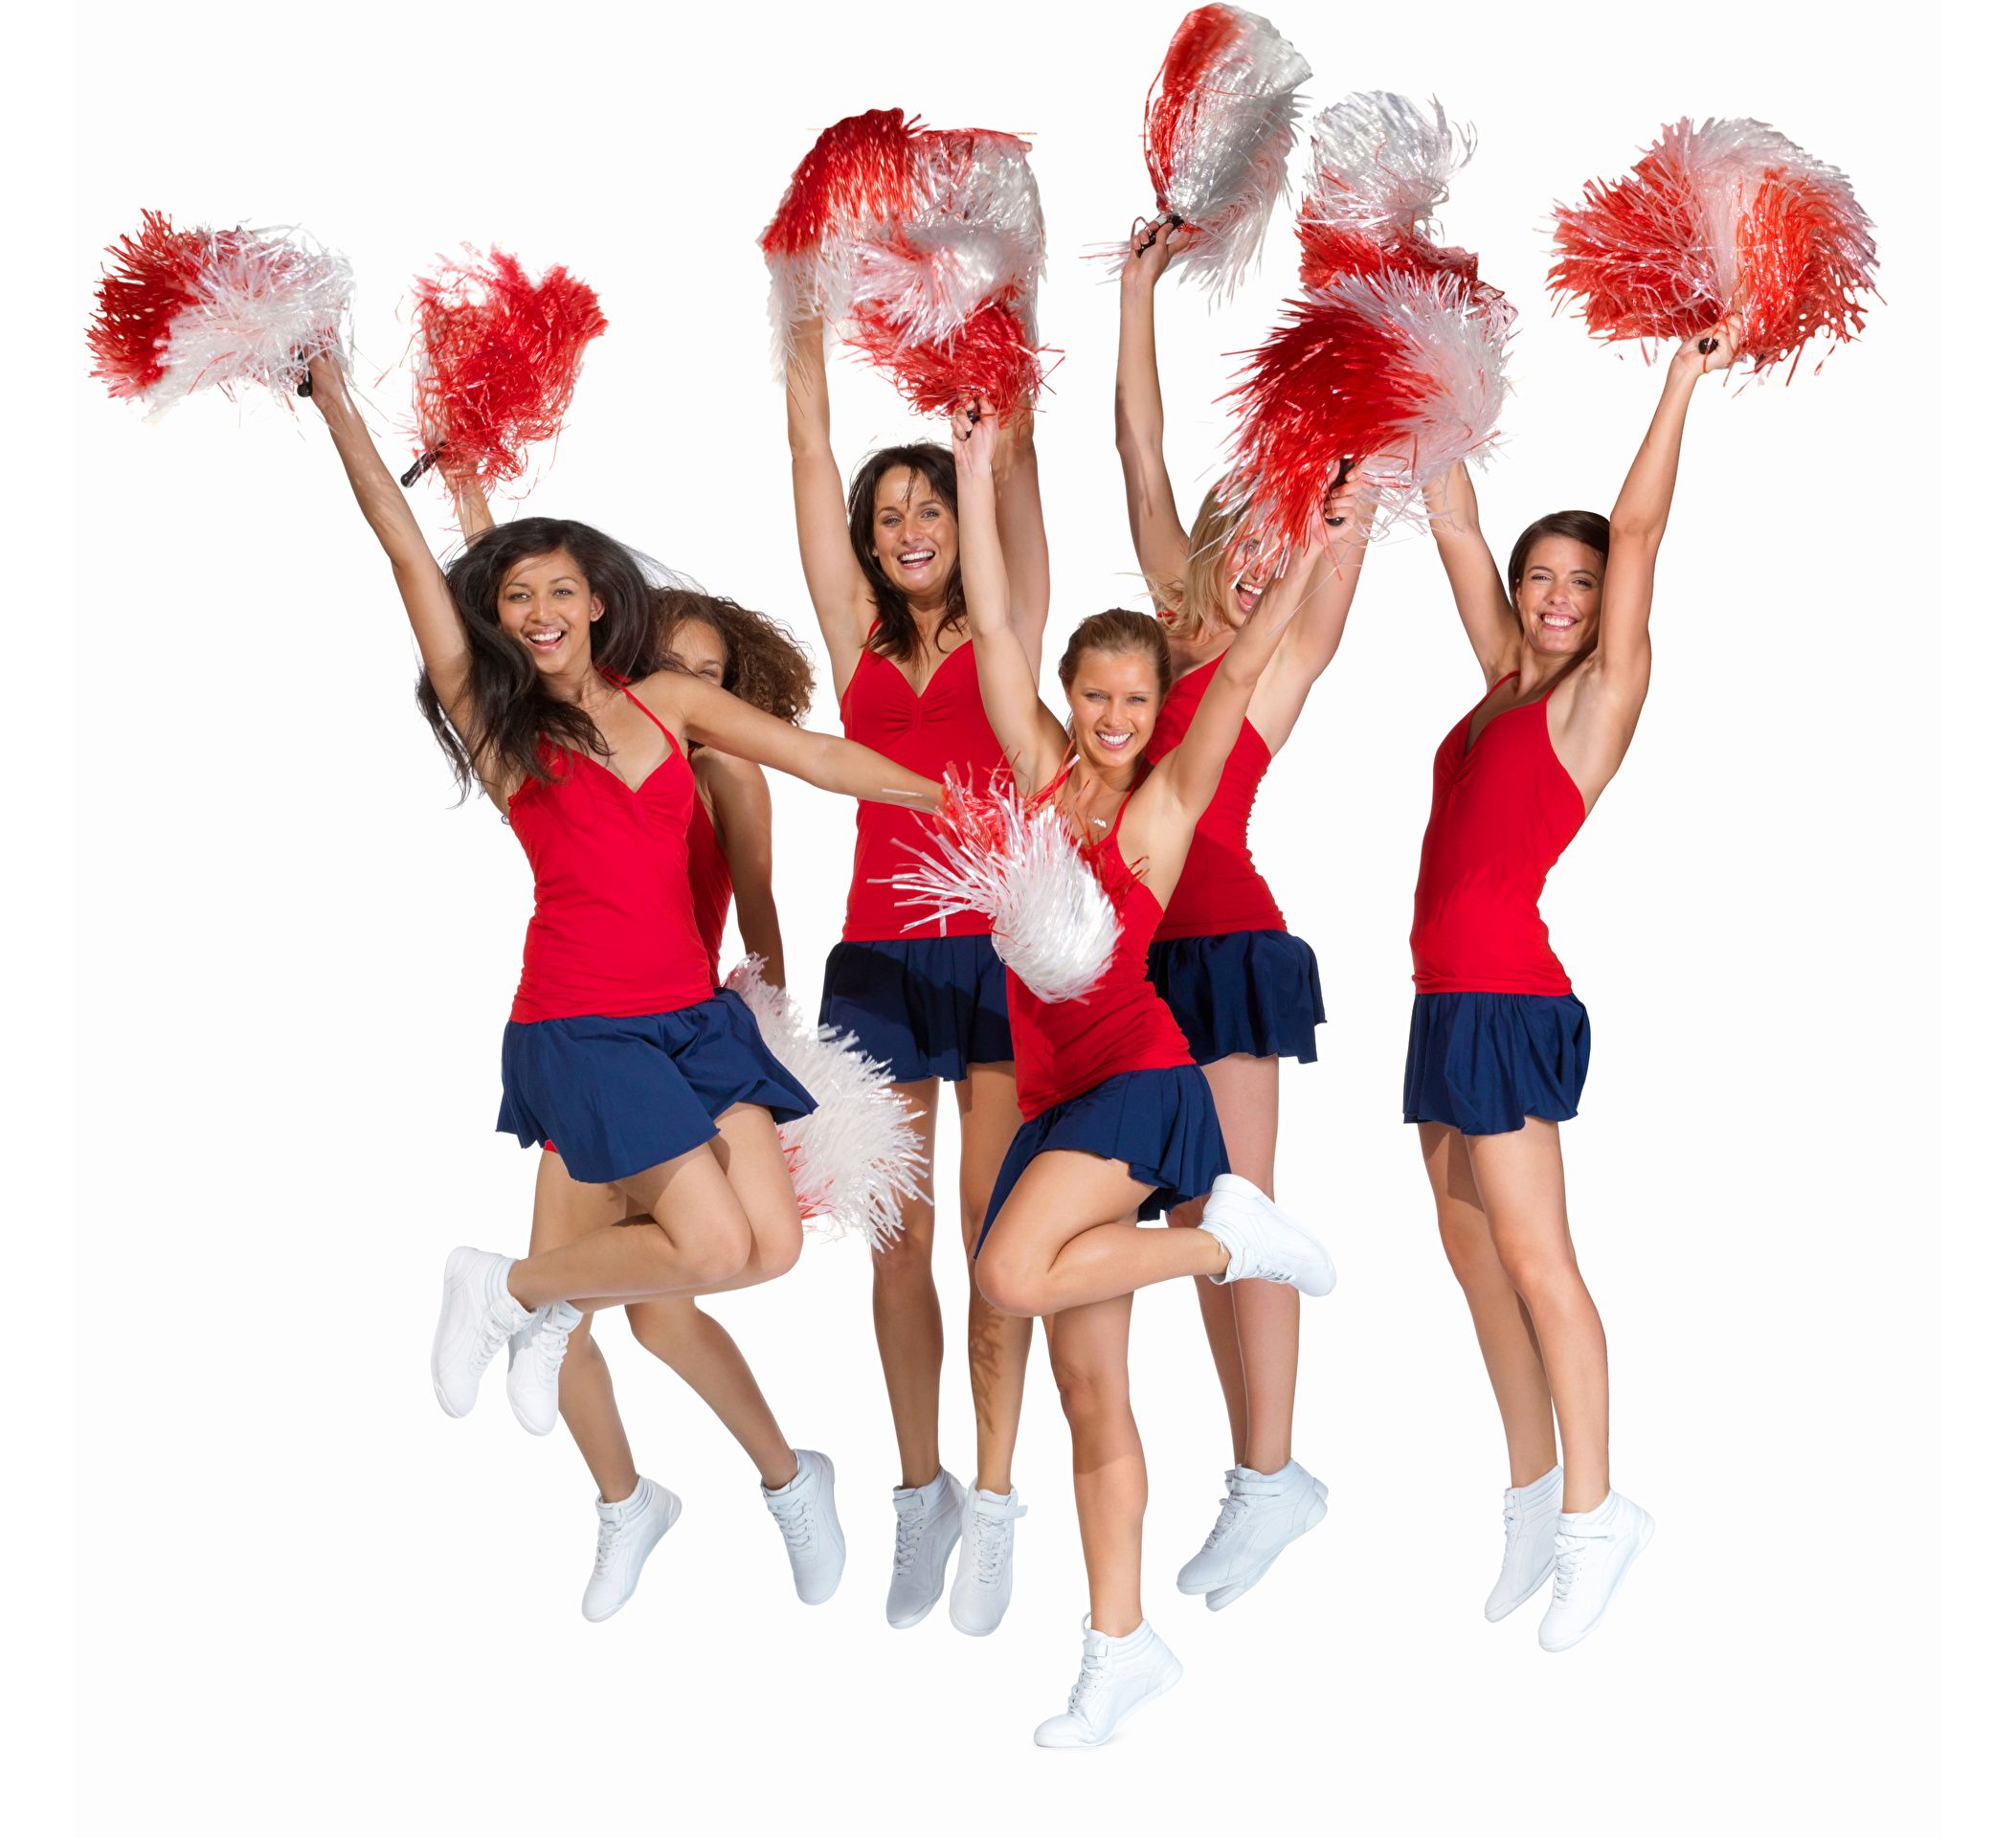 Photos Skirt Cheerleader Girls Jump White background 2106x1920